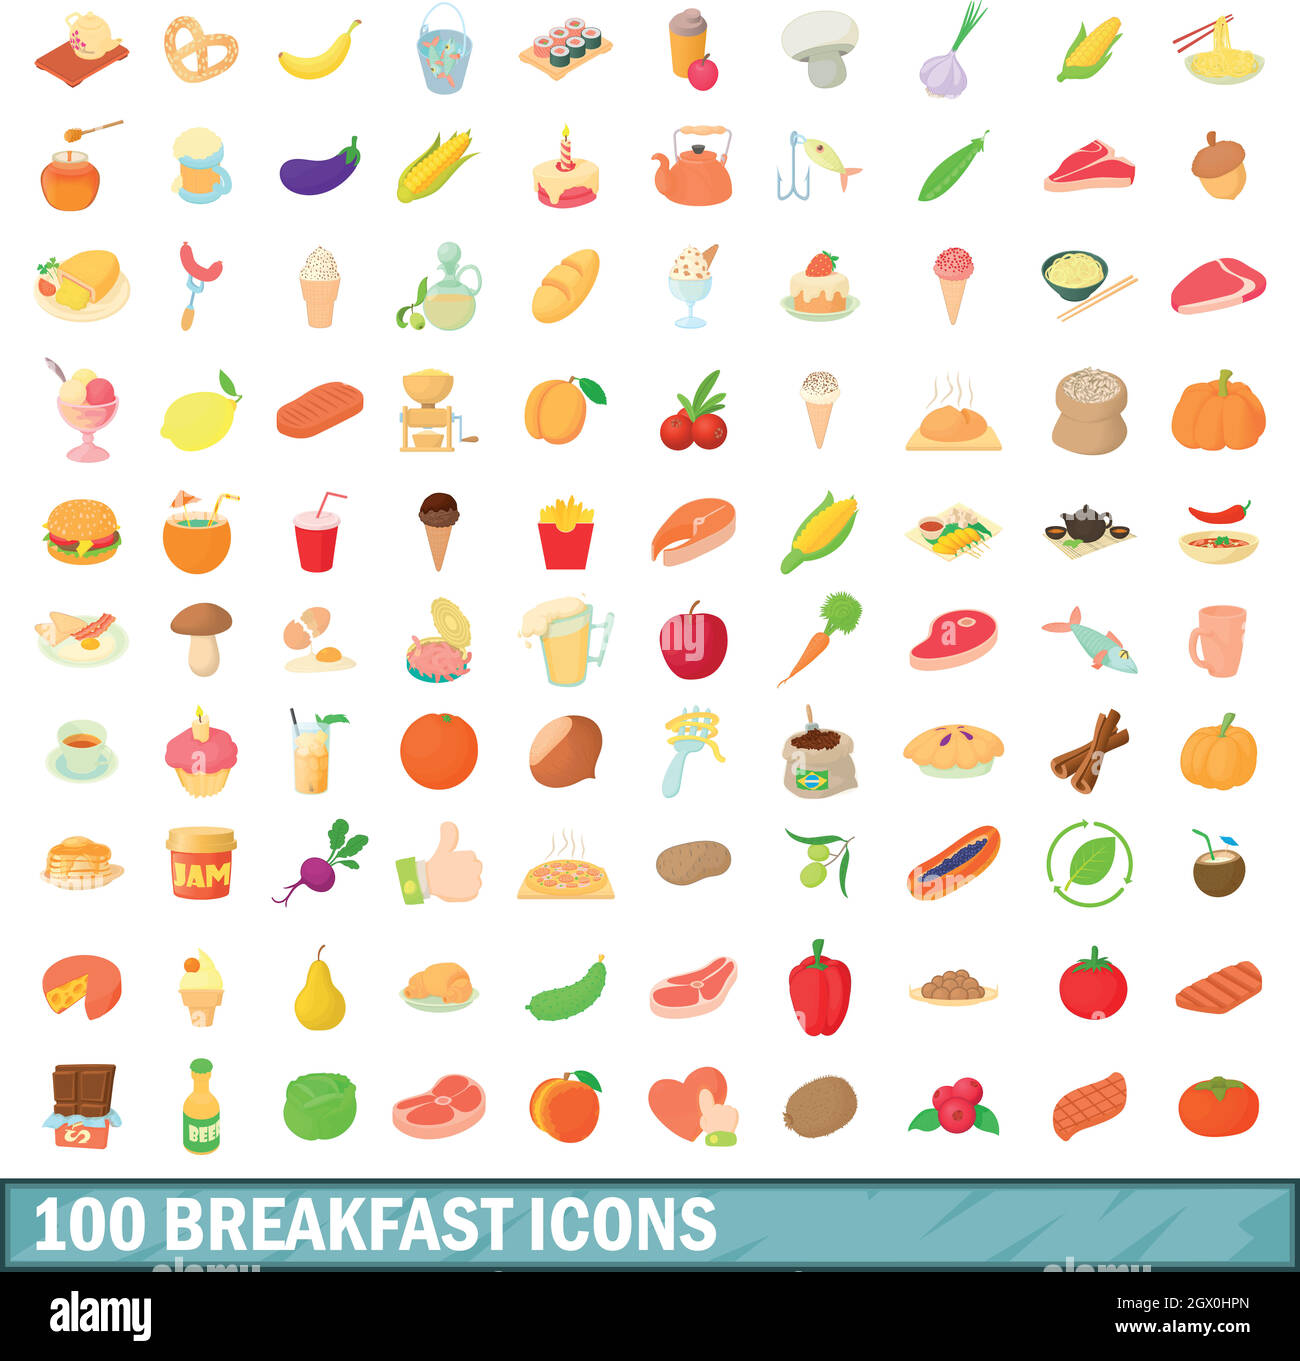 100 breakfast icons set, cartoon style Stock Vector